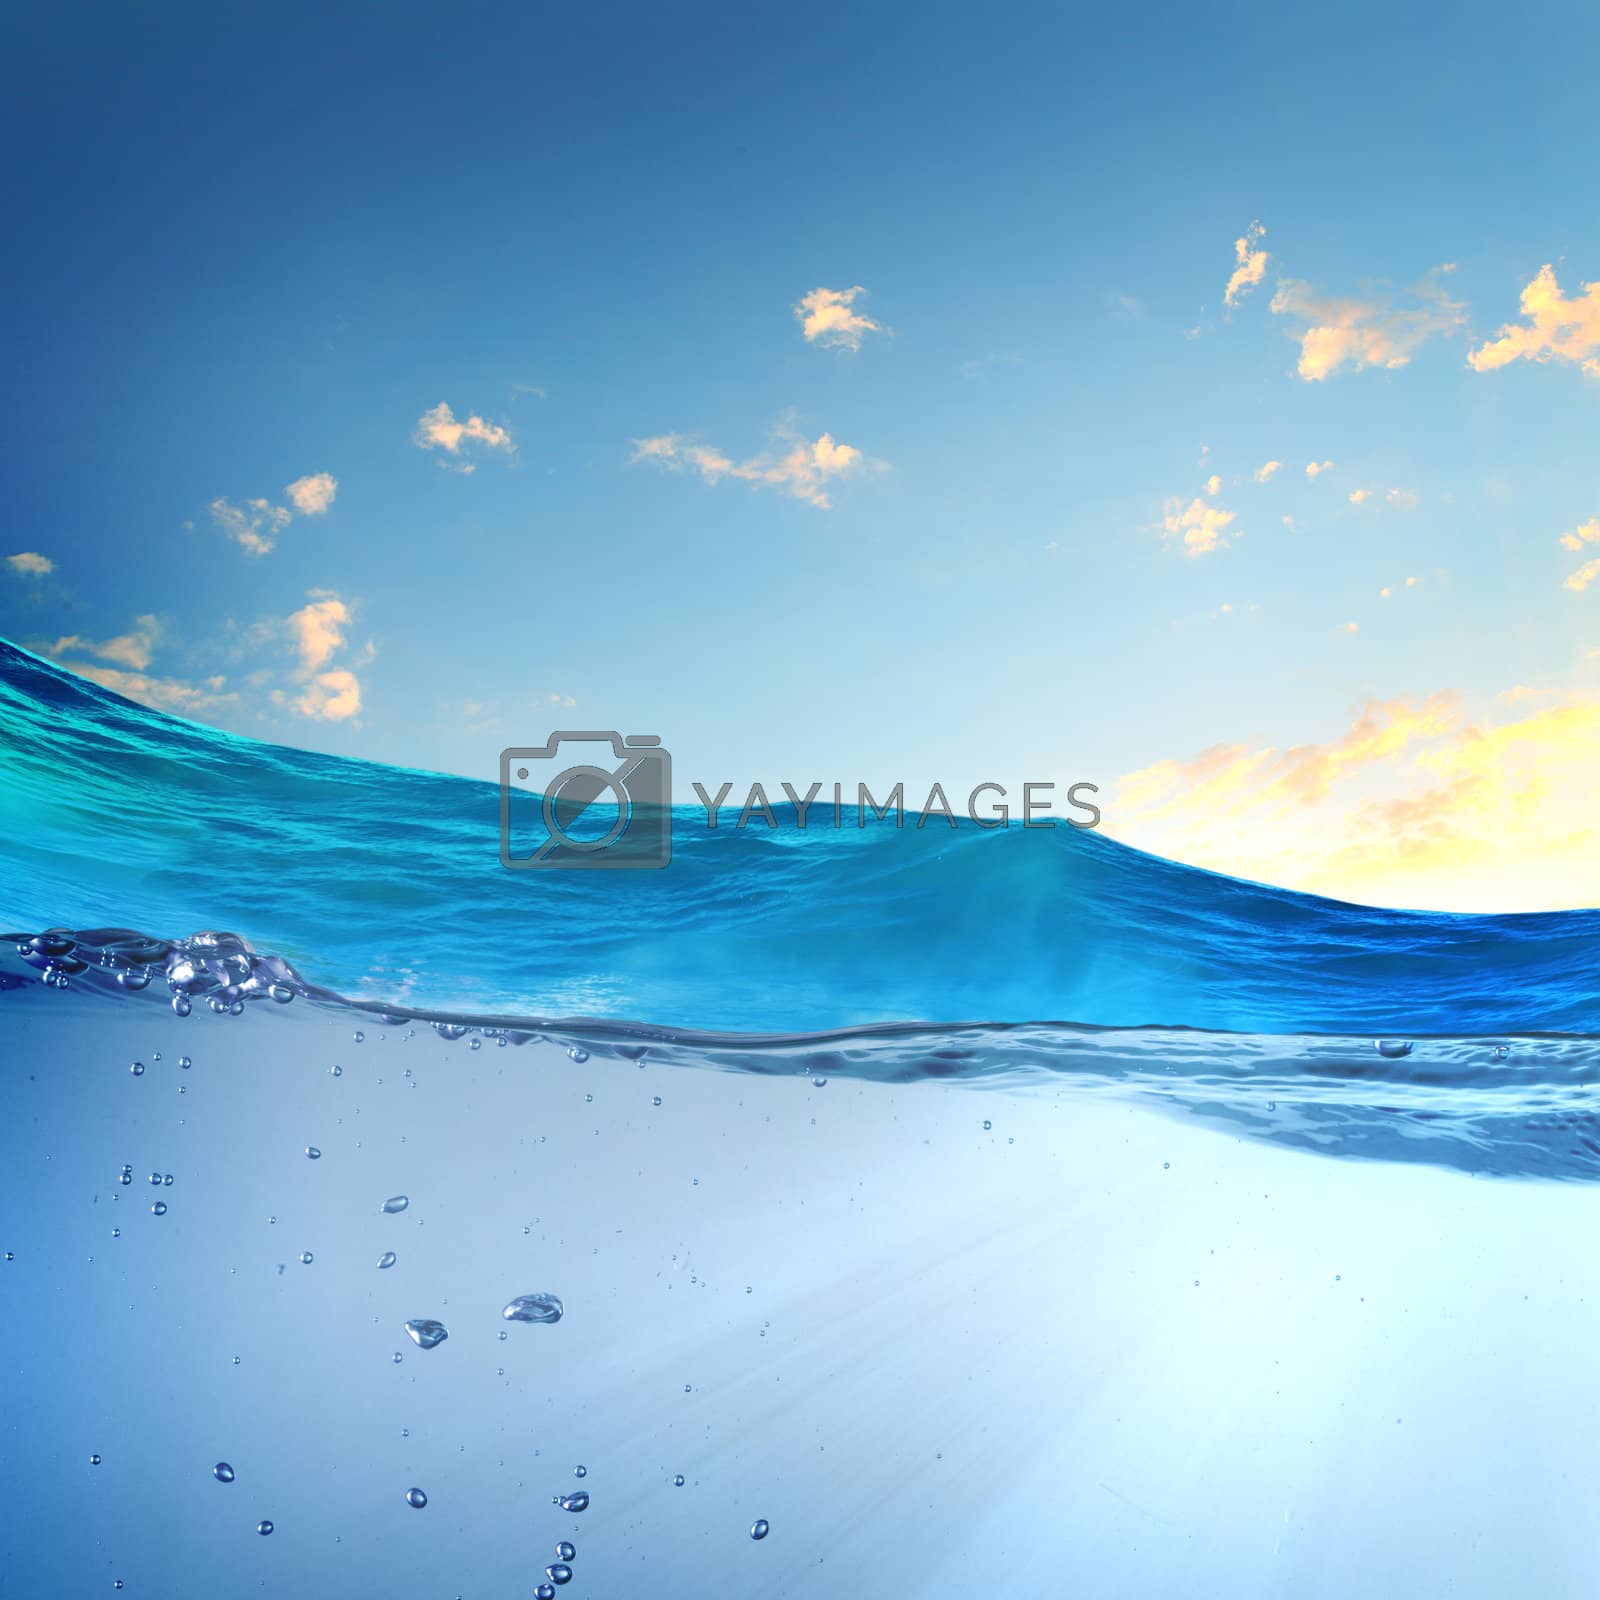 Royalty free image of sundown seascape by sergey_nivens